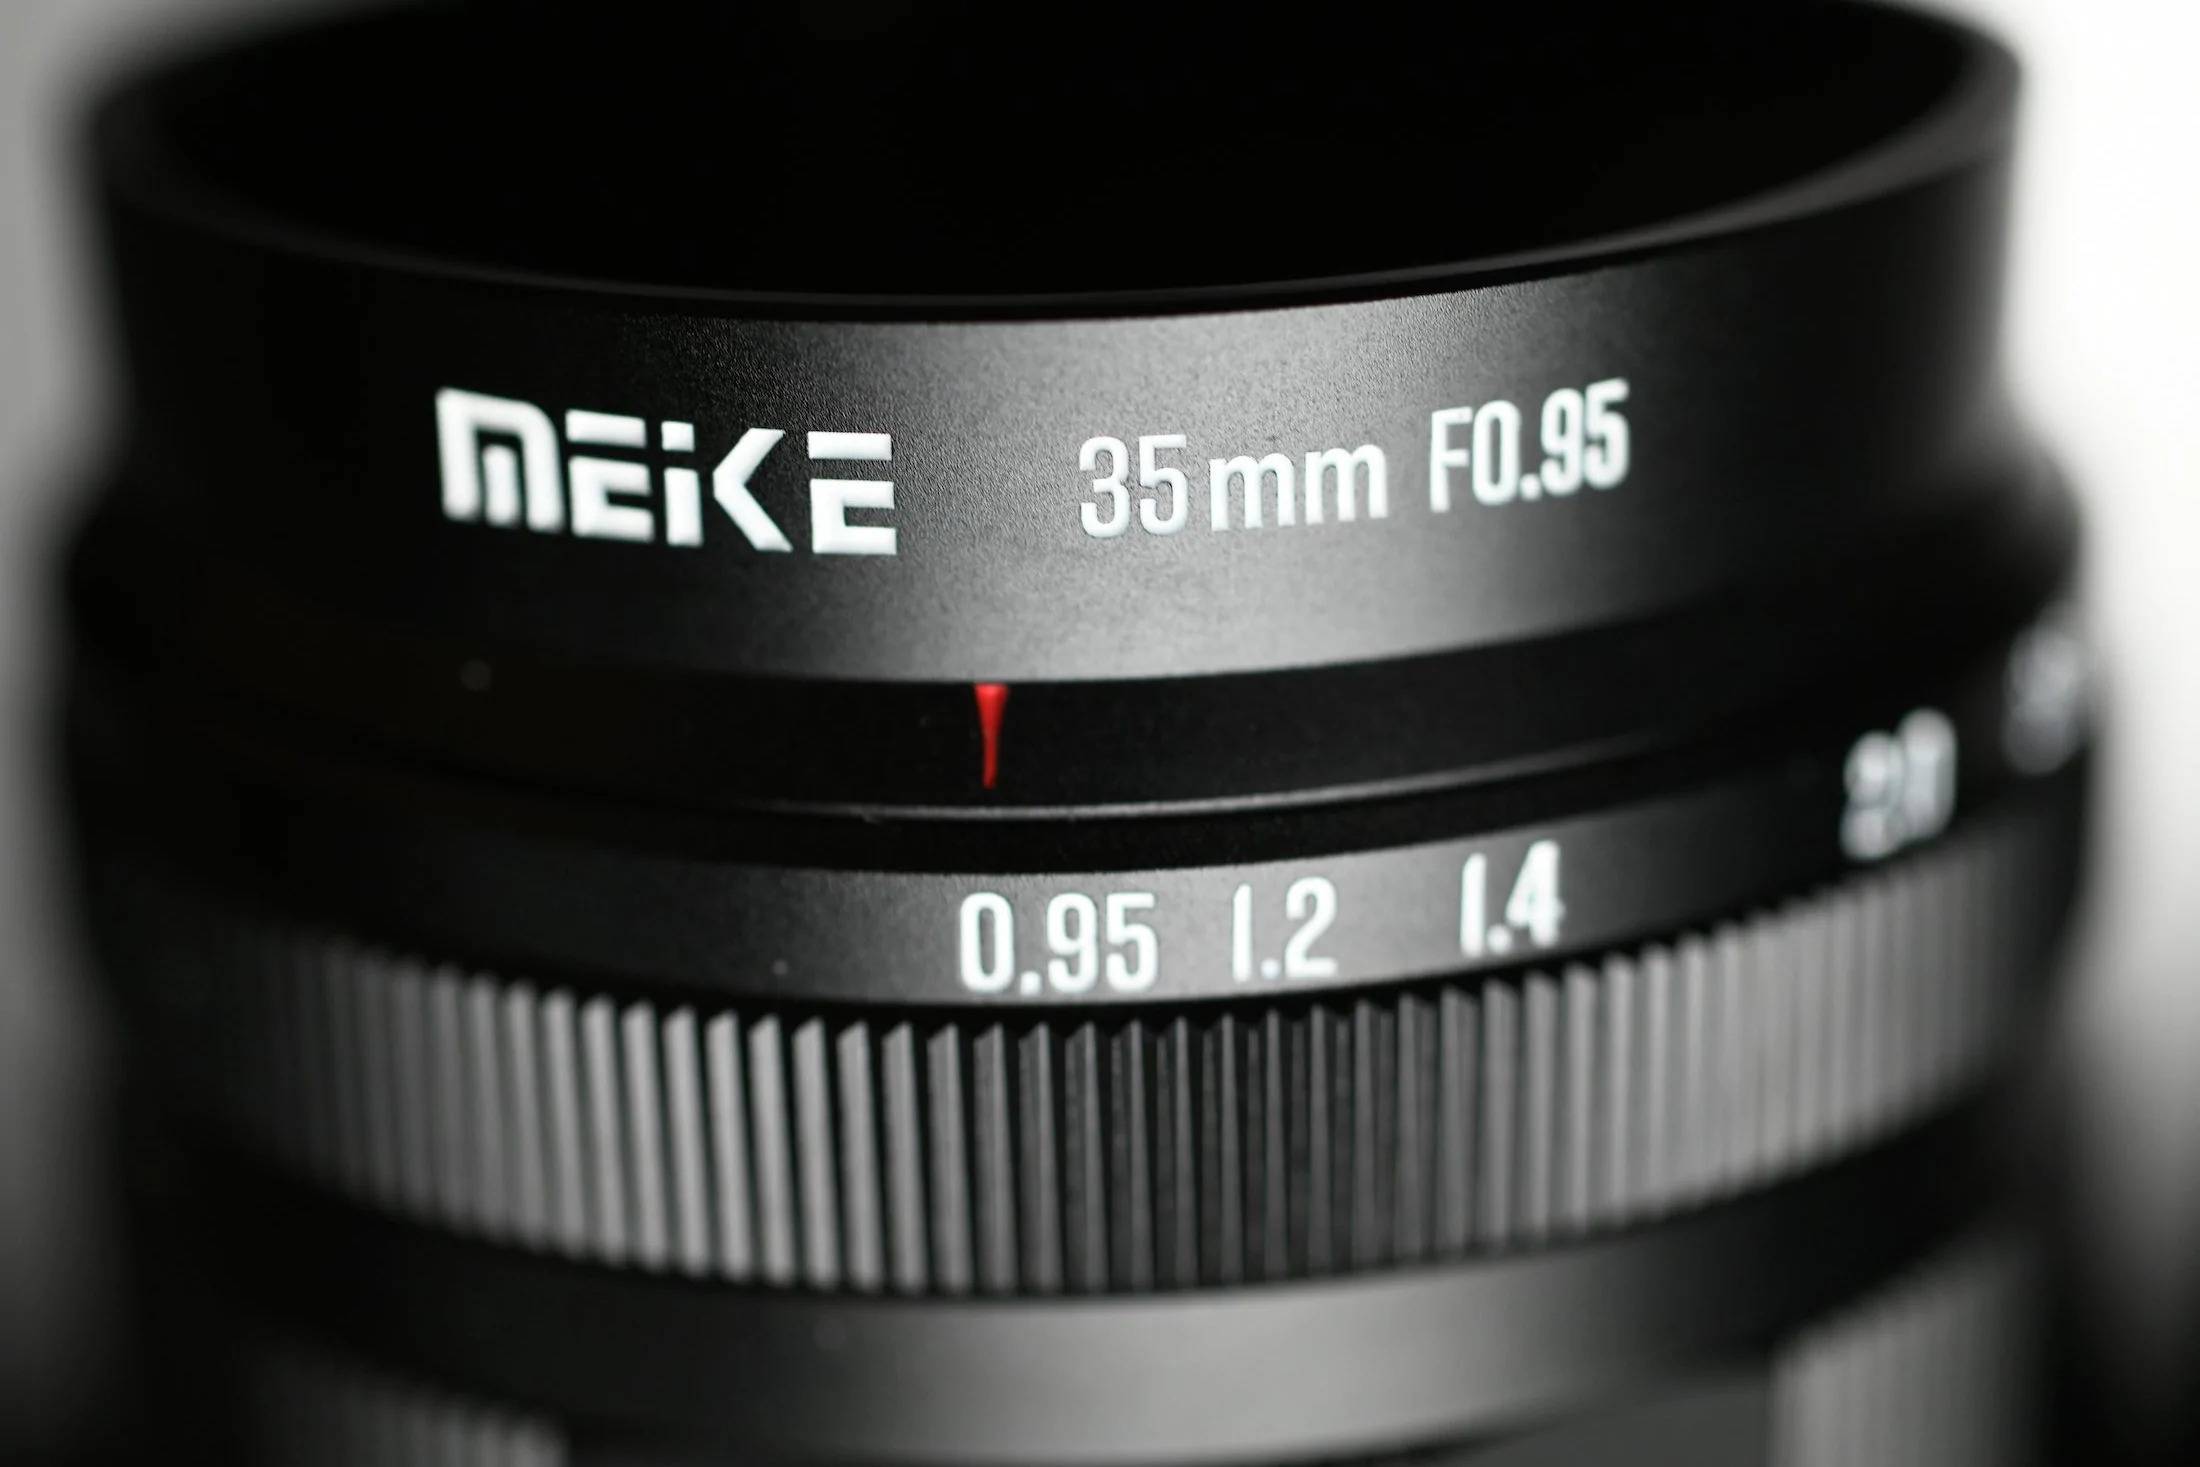 MEIKE 35mm F0.95 Multi Coated (APS-C, Sony E)